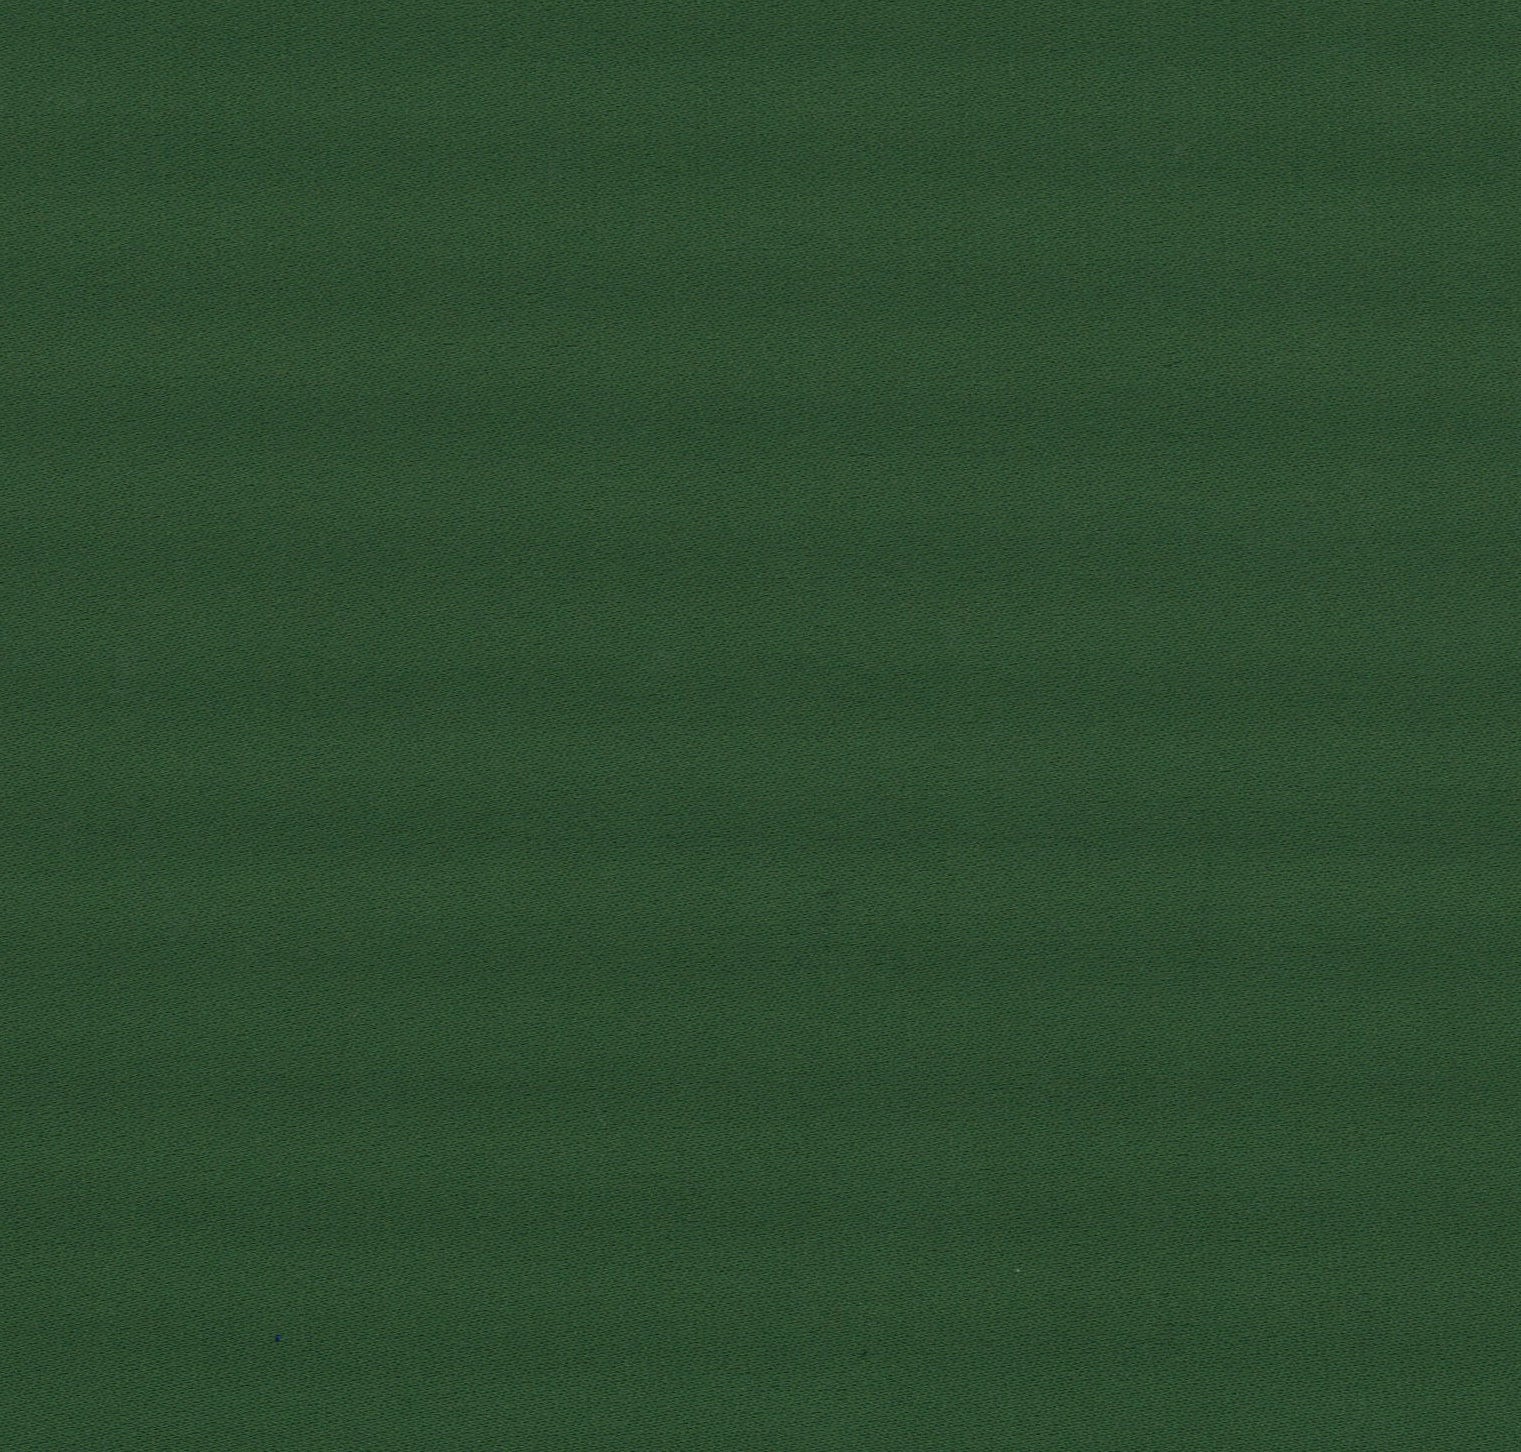 36033-03 Green Polyester Plain Dyed 233g/yd 56&quot; green plain dyed polyester woven Solid Color - knit fabric - woven fabric - fabric company - fabric wholesale - fabric b2b - fabric factory - high quality fabric - hong kong fabric - fabric hk - acetate fabric - cotton fabric - linen fabric - metallic fabric - nylon fabric - polyester fabric - spandex fabric - chun wing hing - cwh hk - fabric worldwide ship - 針織布 - 梳織布 - 布料公司- 布料批發 - 香港布料 - 秦榮興